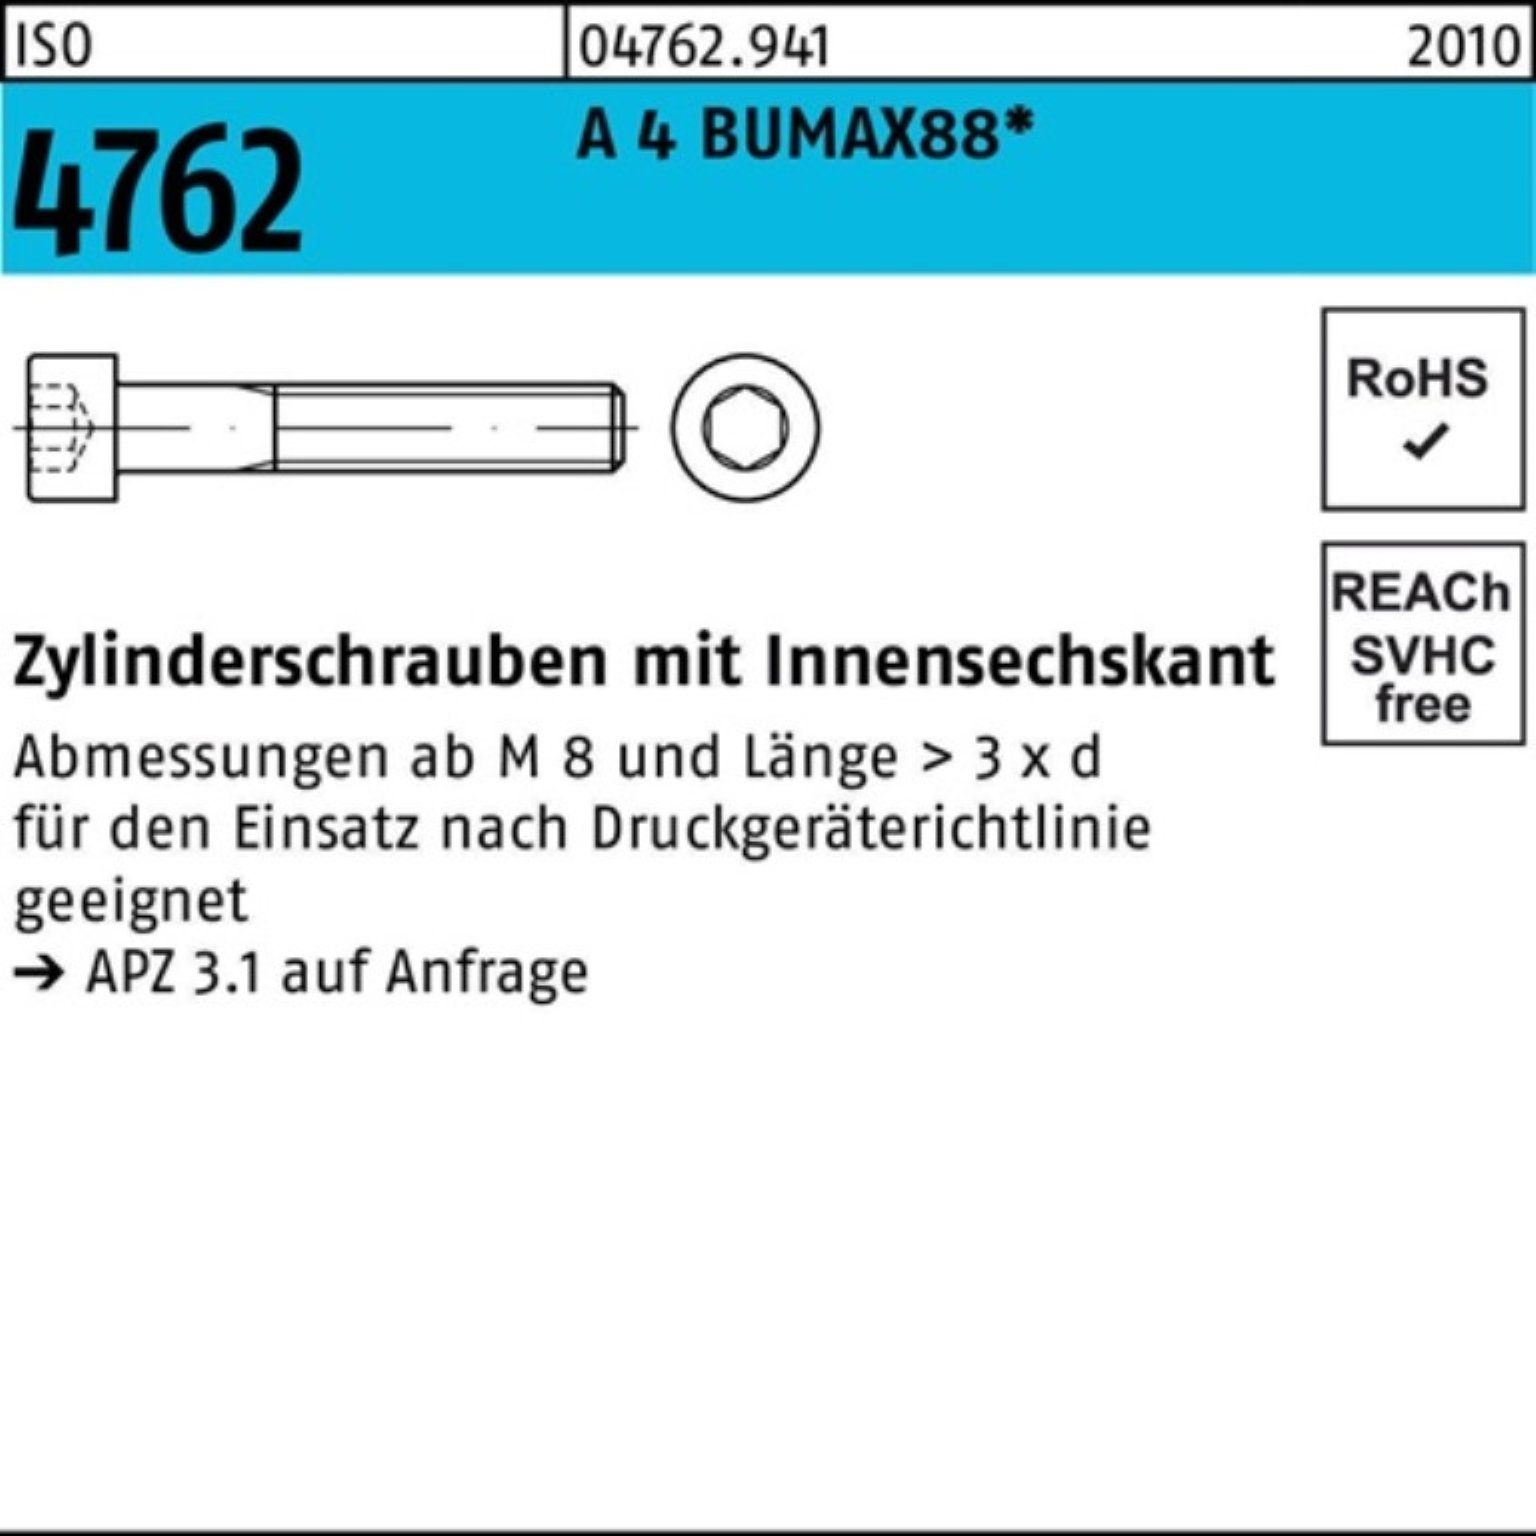 Innen-6kt M3x BUMAX88 4762 Zylinderschraube A Bufab 4 500 S Pack 6 Zylinderschraube ISO 500er